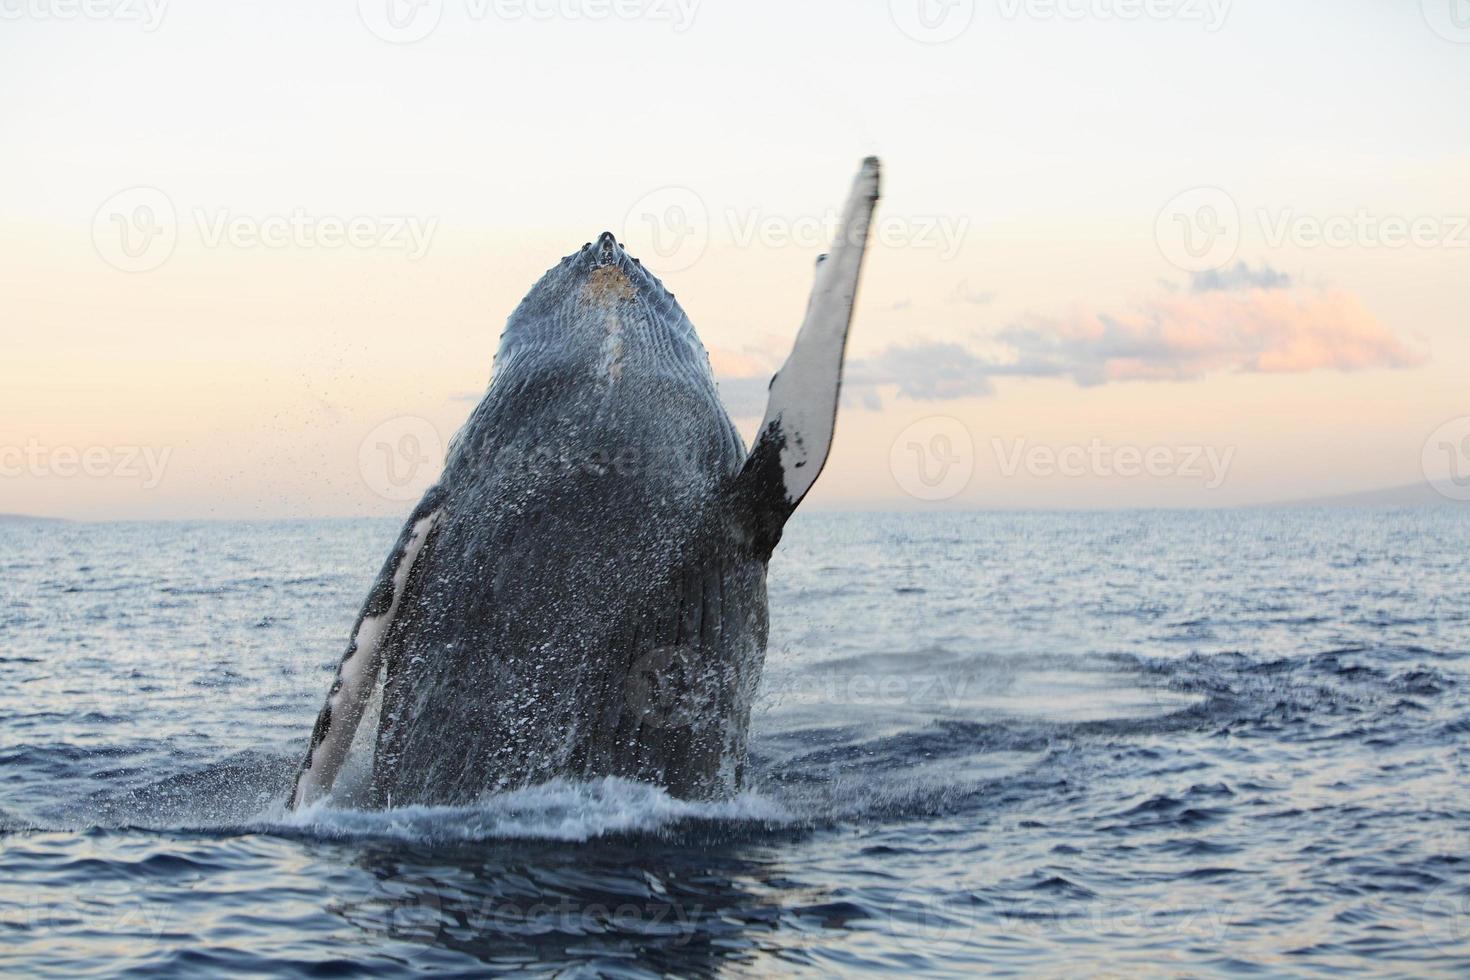 rompendo baleia jubarte foto